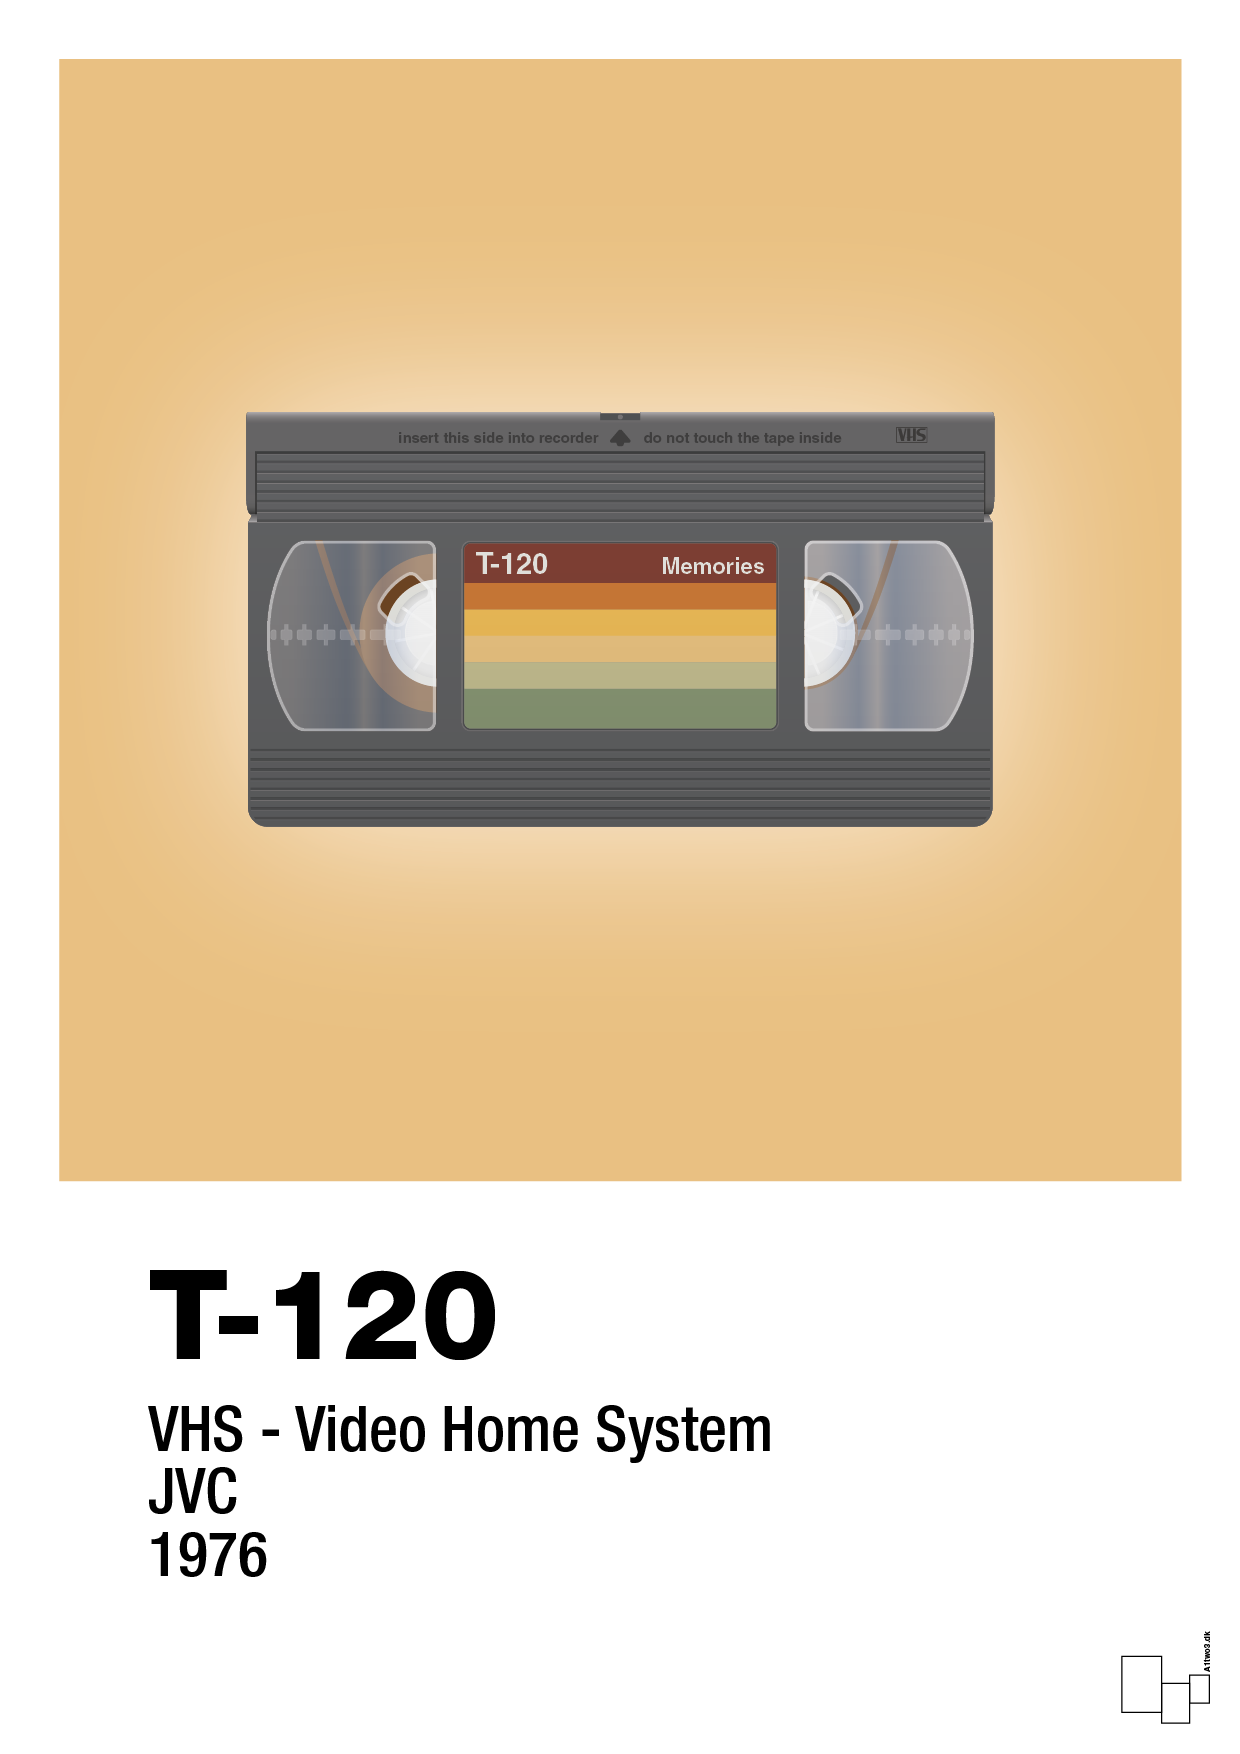 videobånd t-120 - Plakat med Grafik i Charismatic